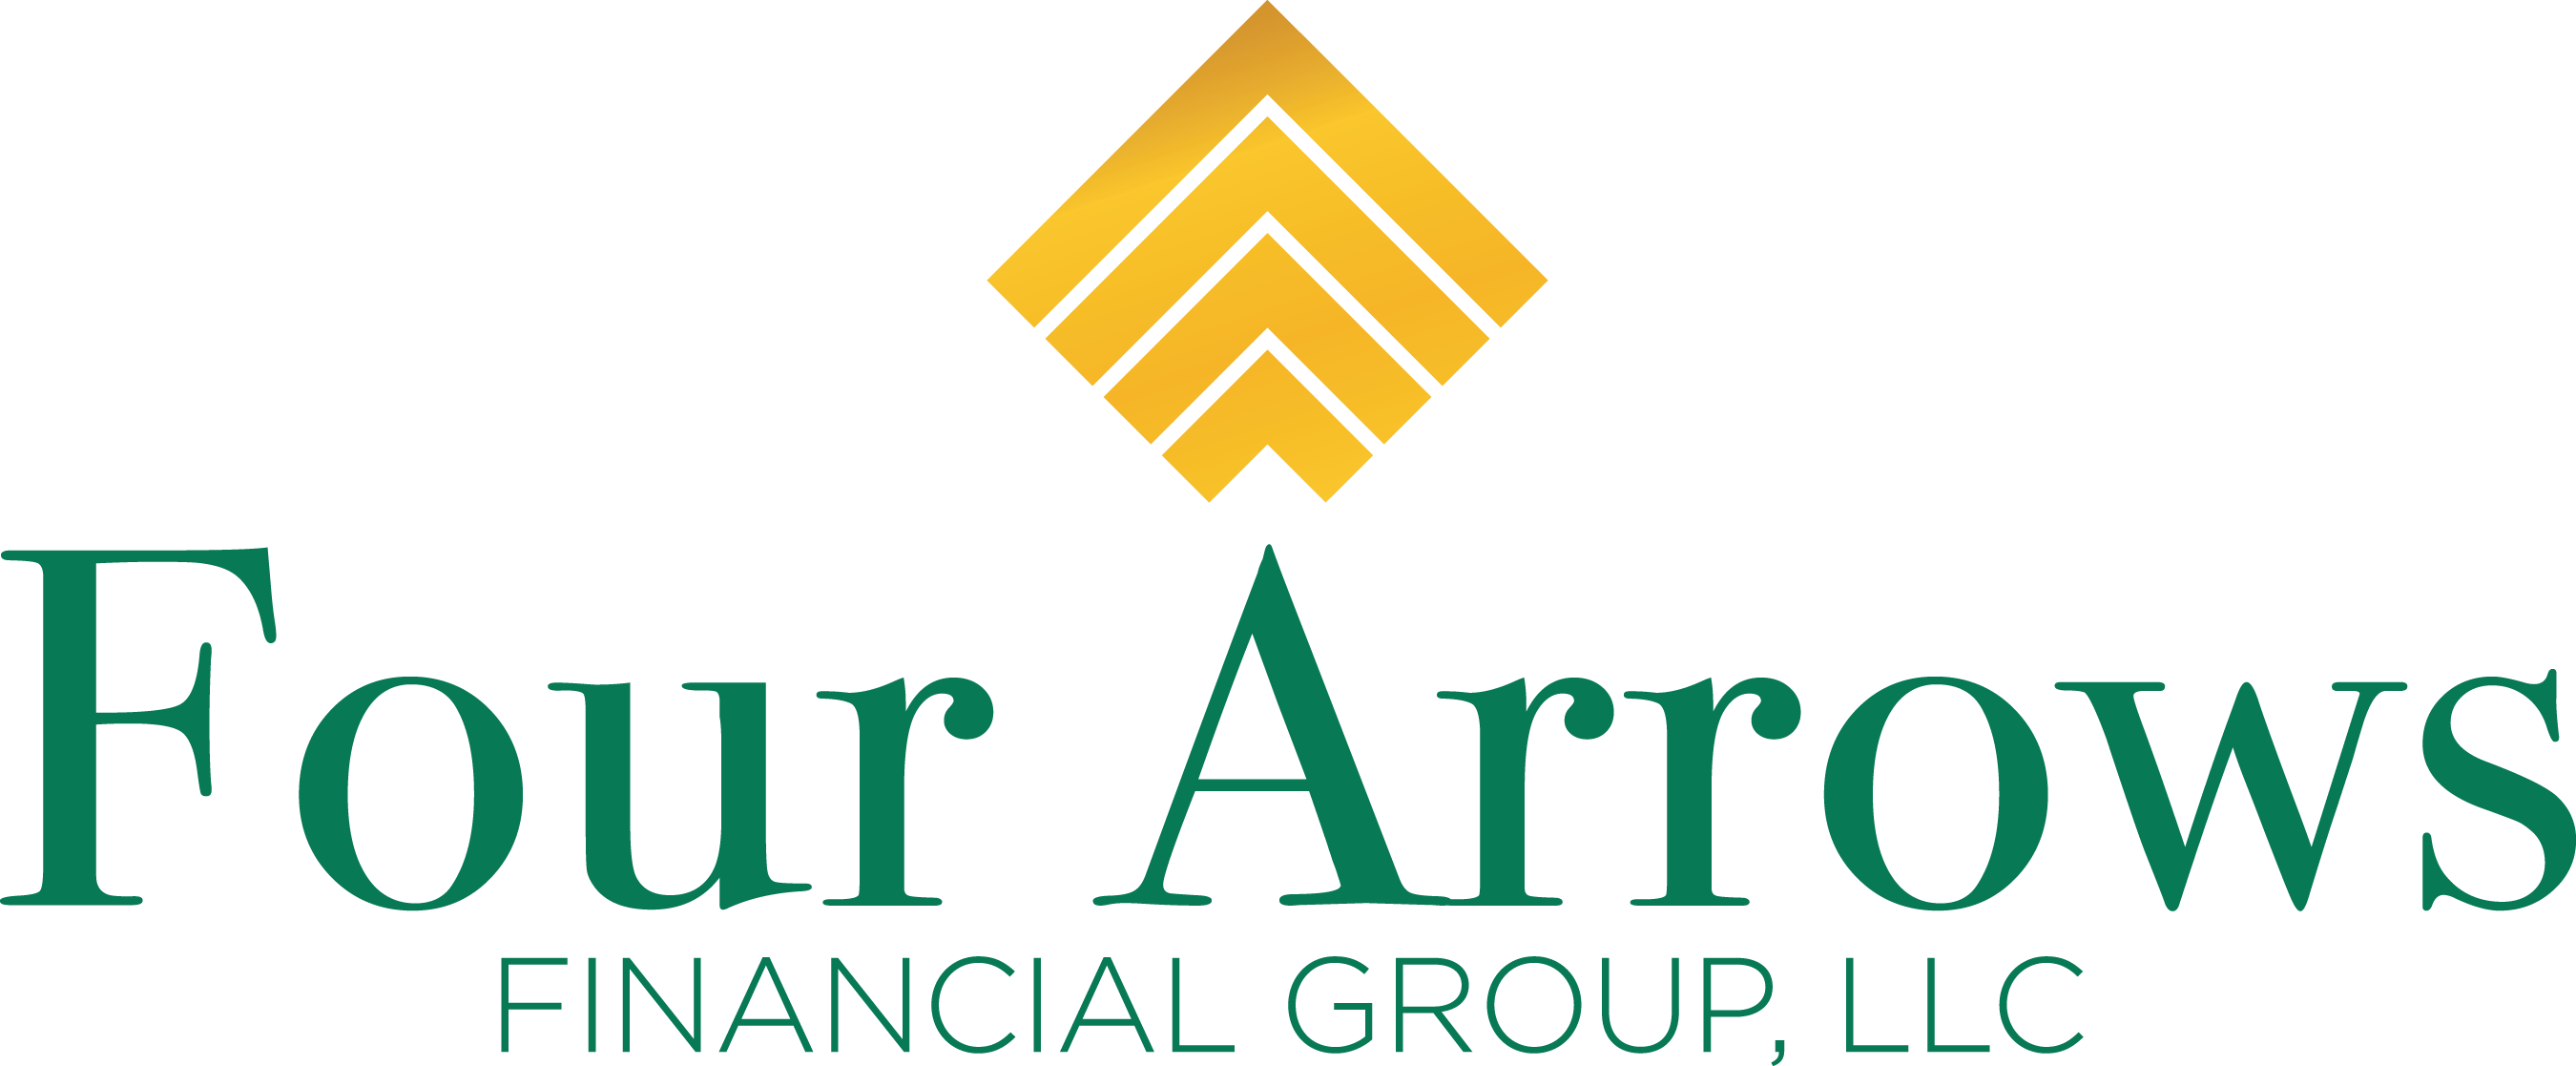 Four Arrows Financial Group, LLC logo